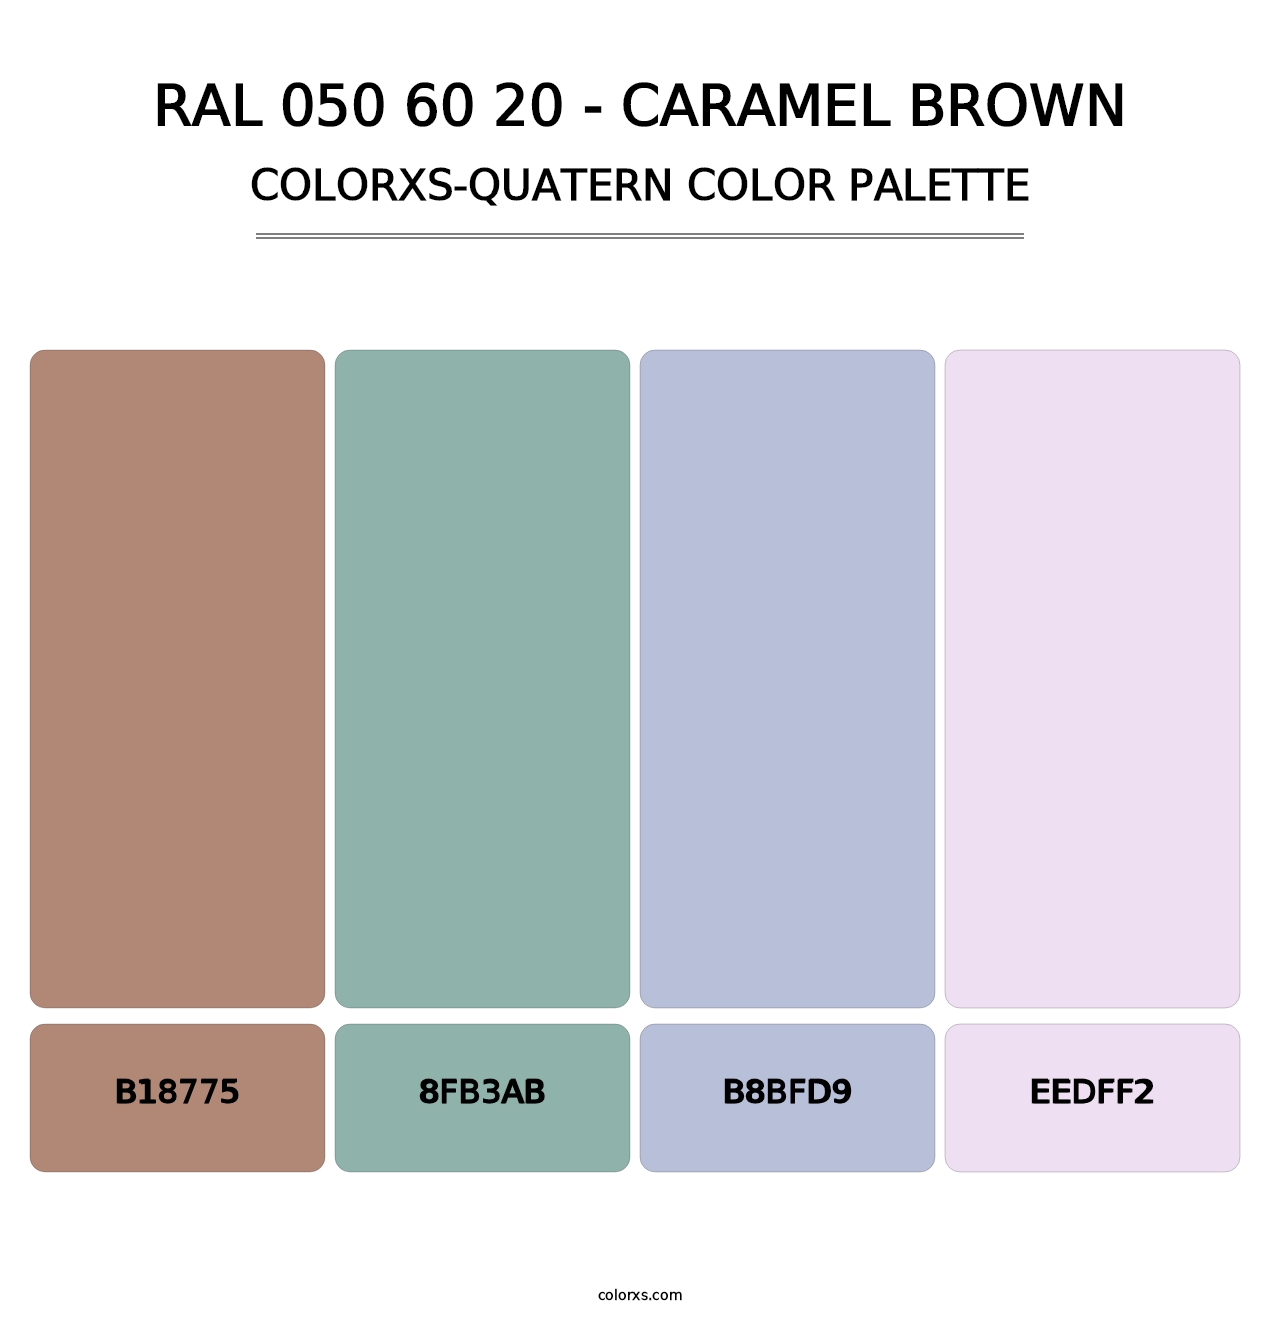 RAL 050 60 20 - Caramel Brown - Colorxs Quatern Palette